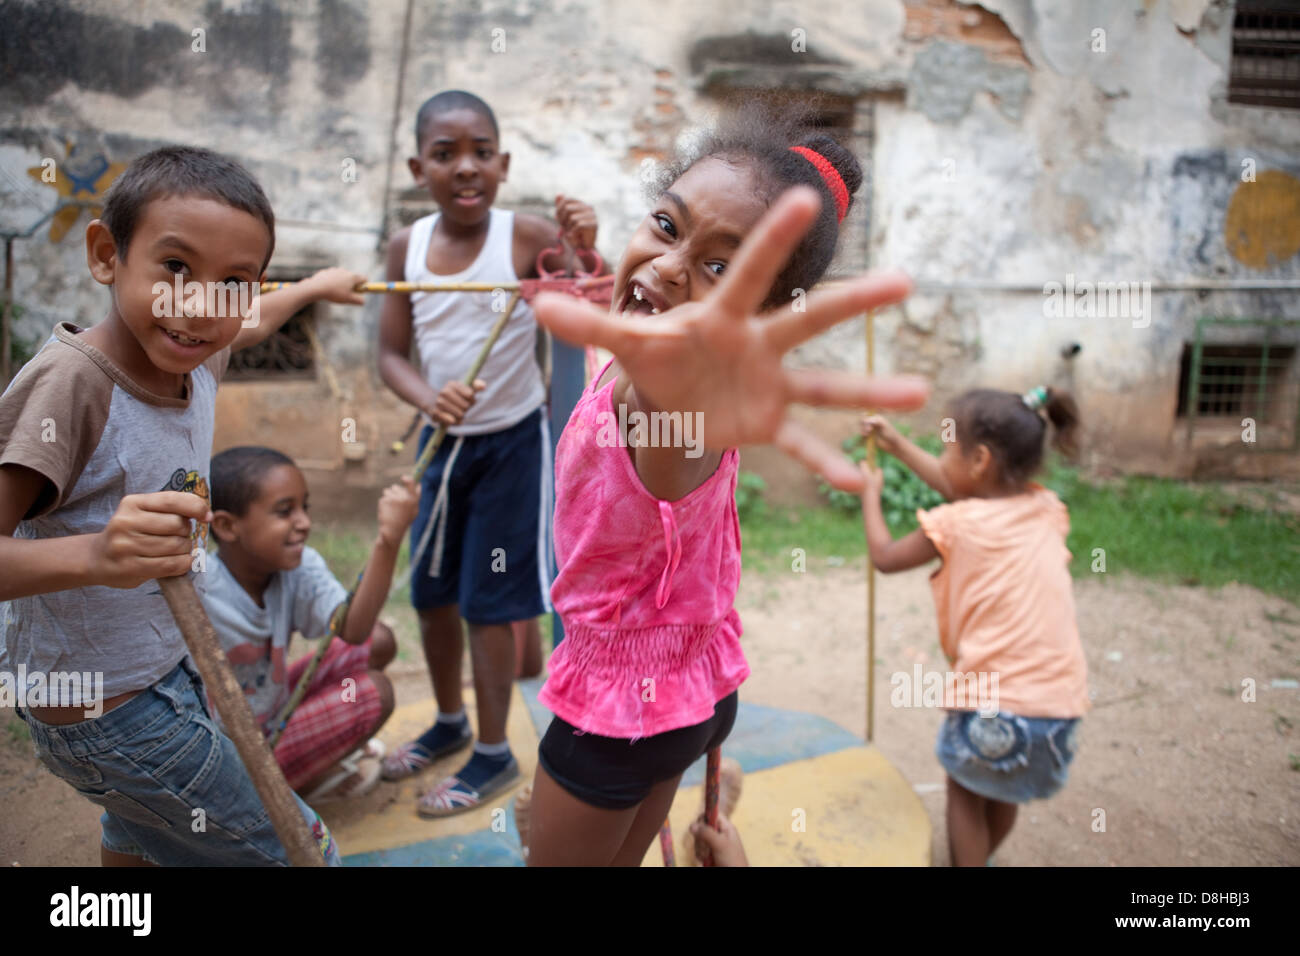 Children in Havana, Cuba playing on playground, exuding vibrant joy. Stock Photo